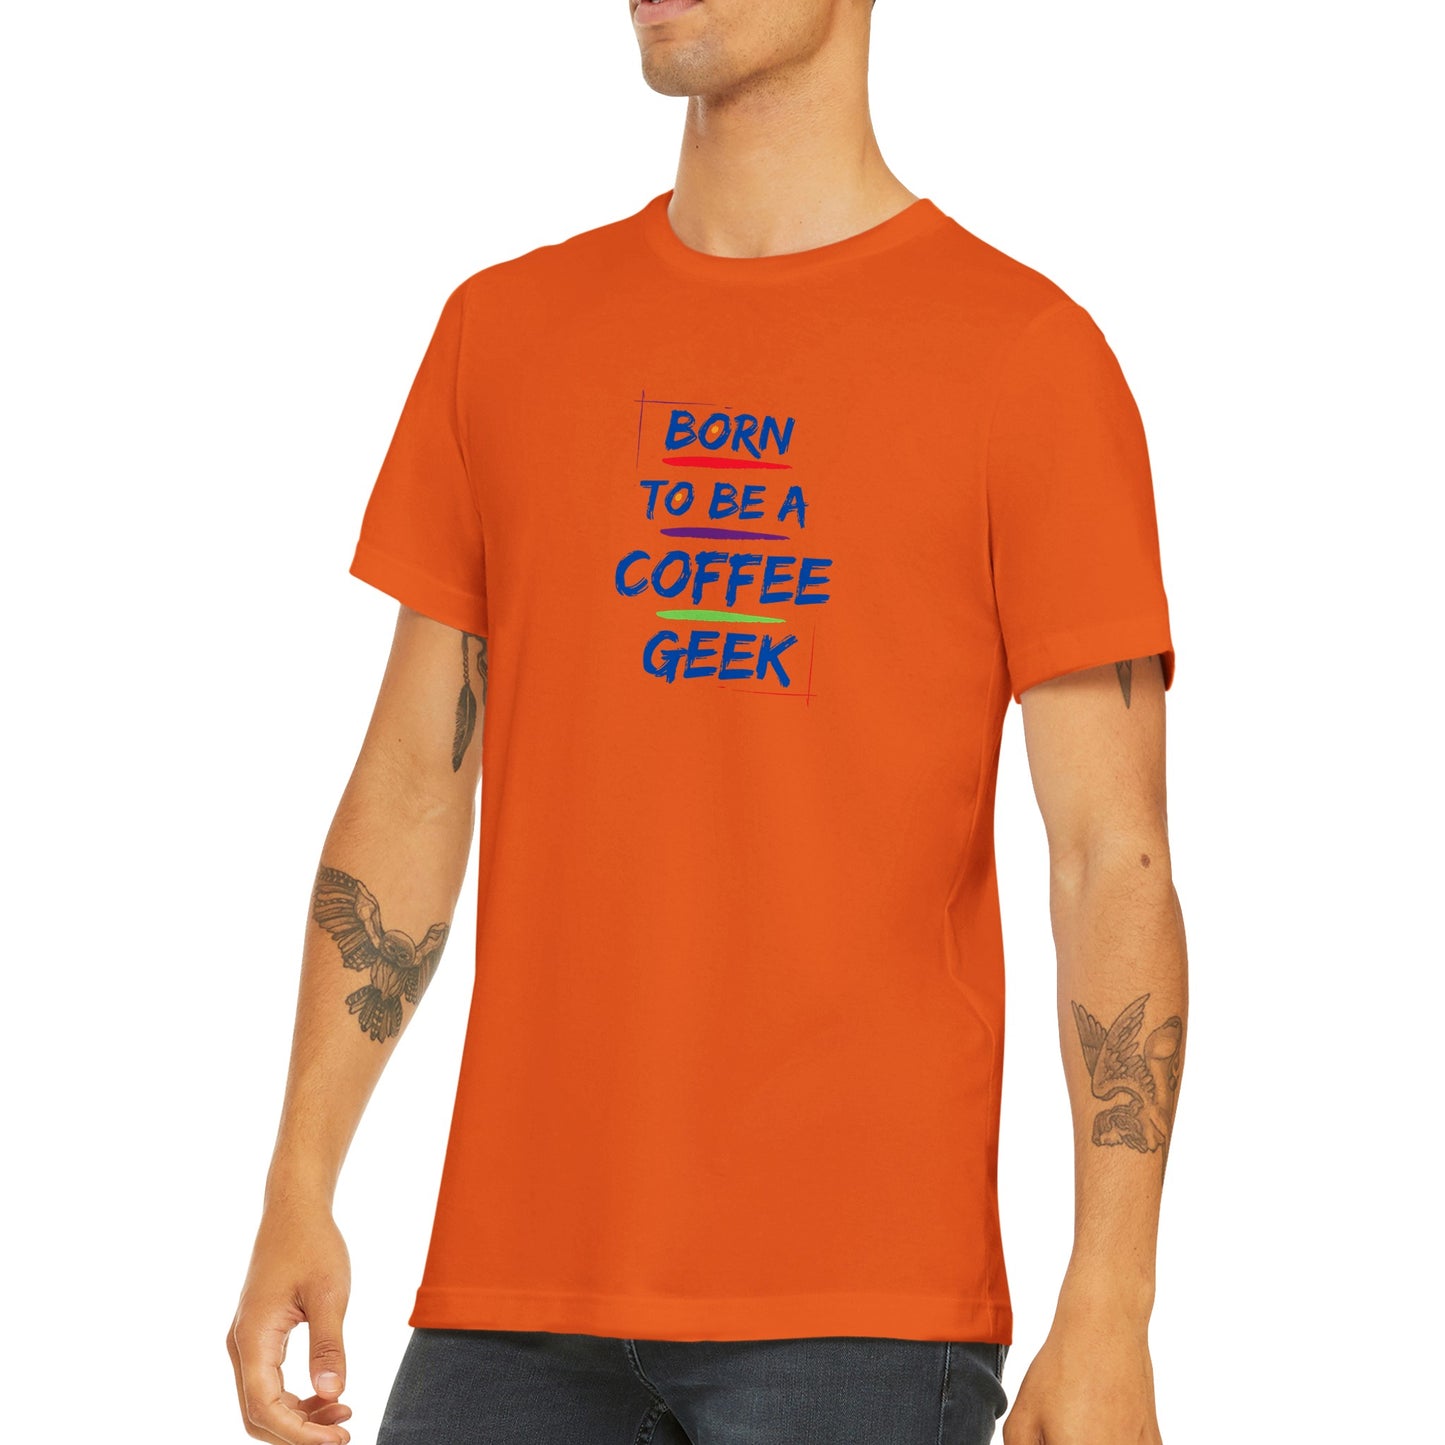 Premium Unisex "Geek" T-shirt